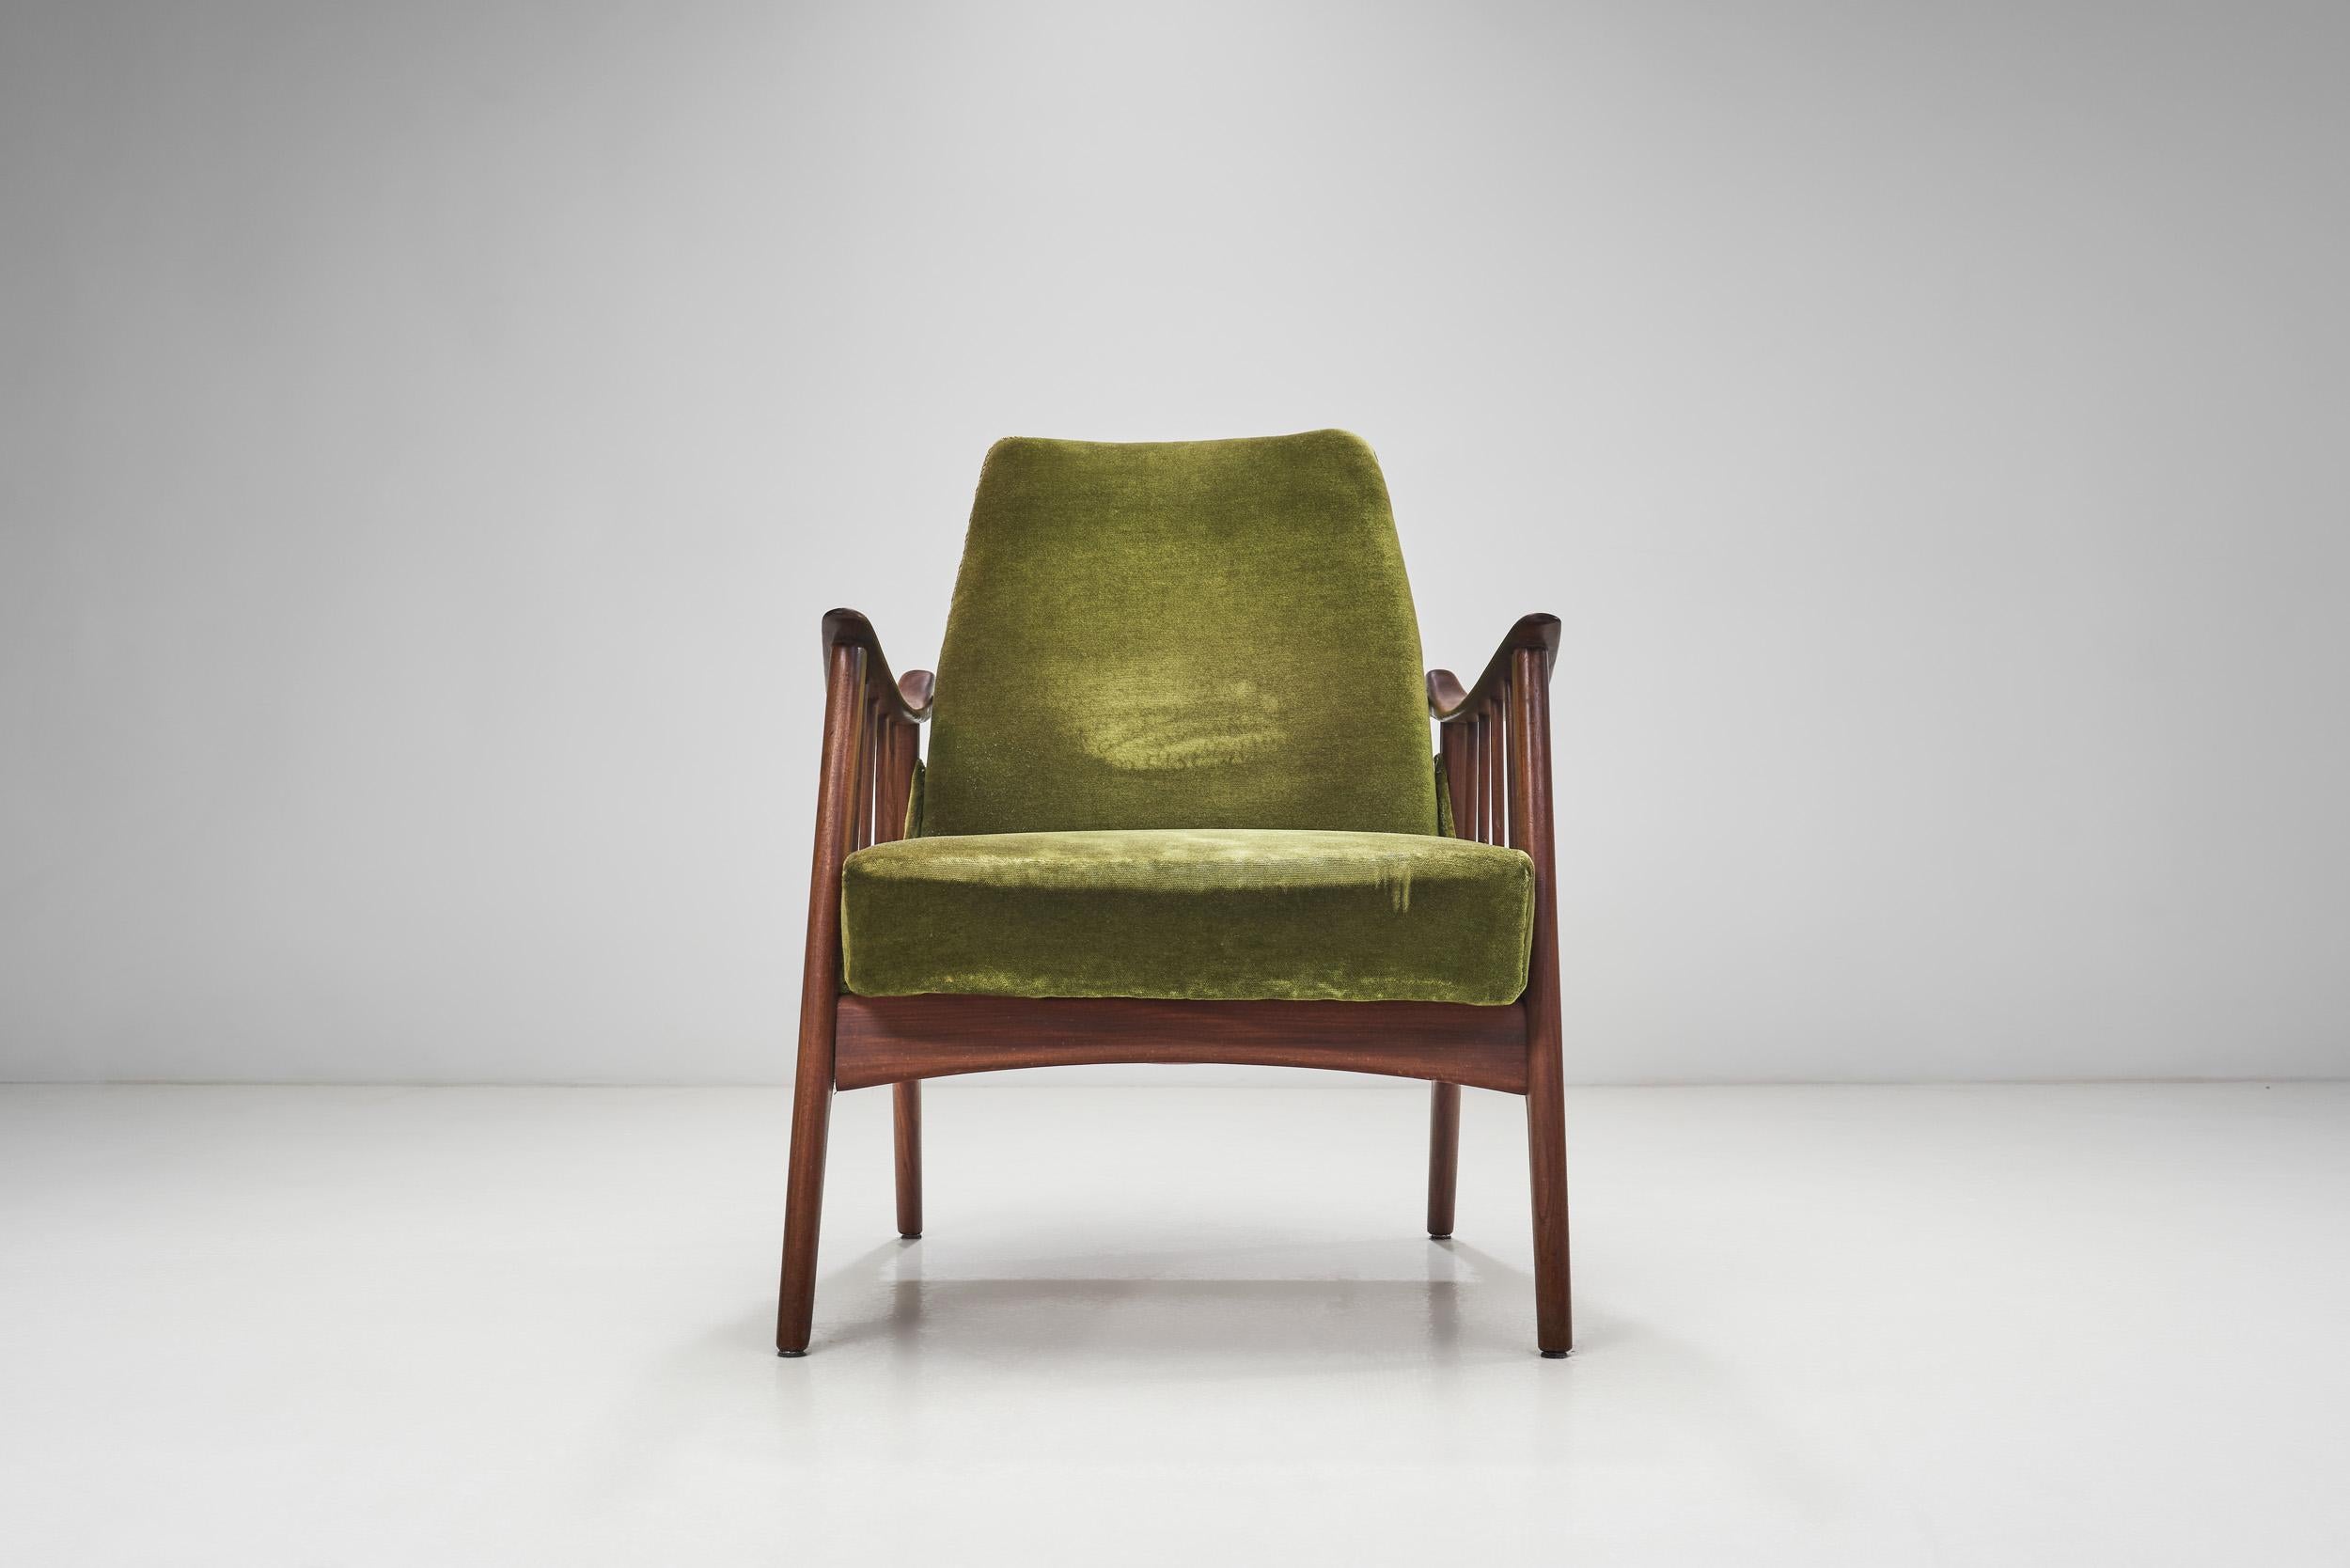 Teak Upholstered Armchairs with Slat Armrests, Denmark 1960s For Sale 5